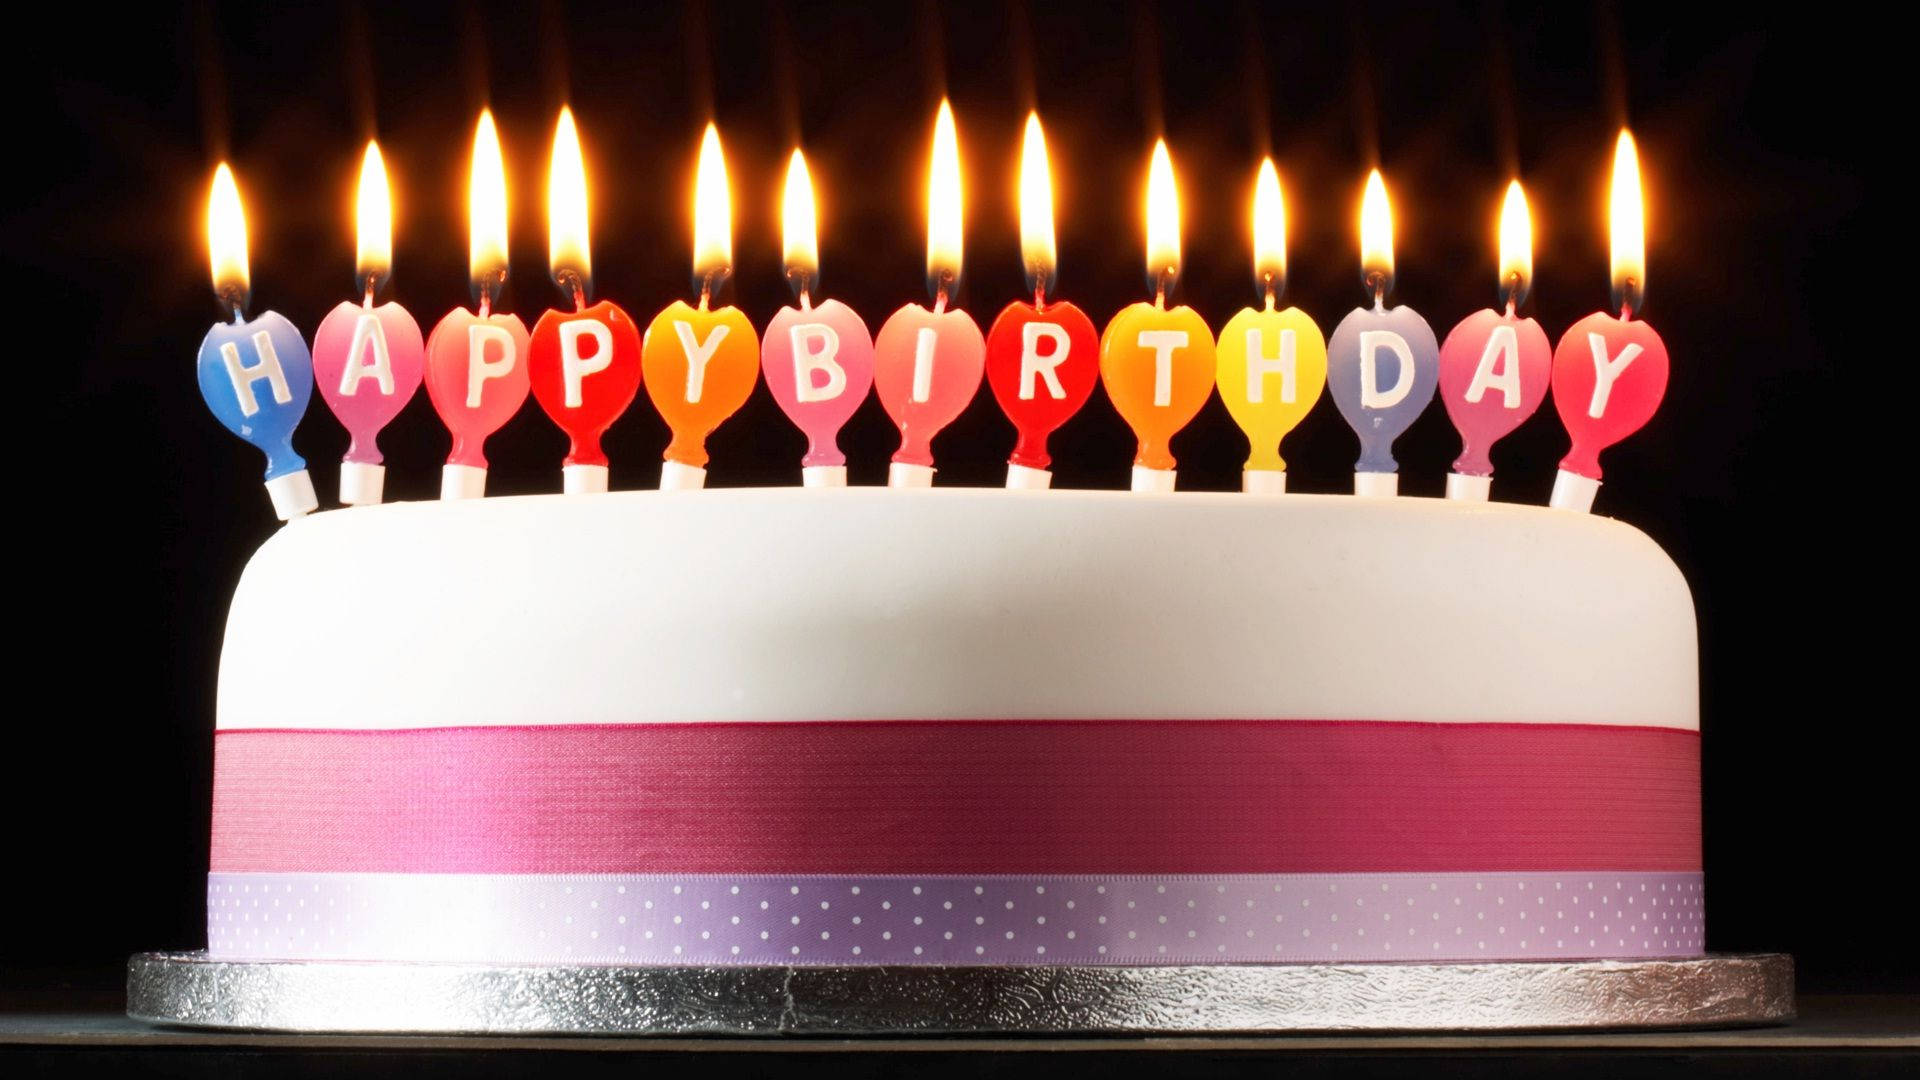 Birthday Cake With Happy Birthday Candles Background